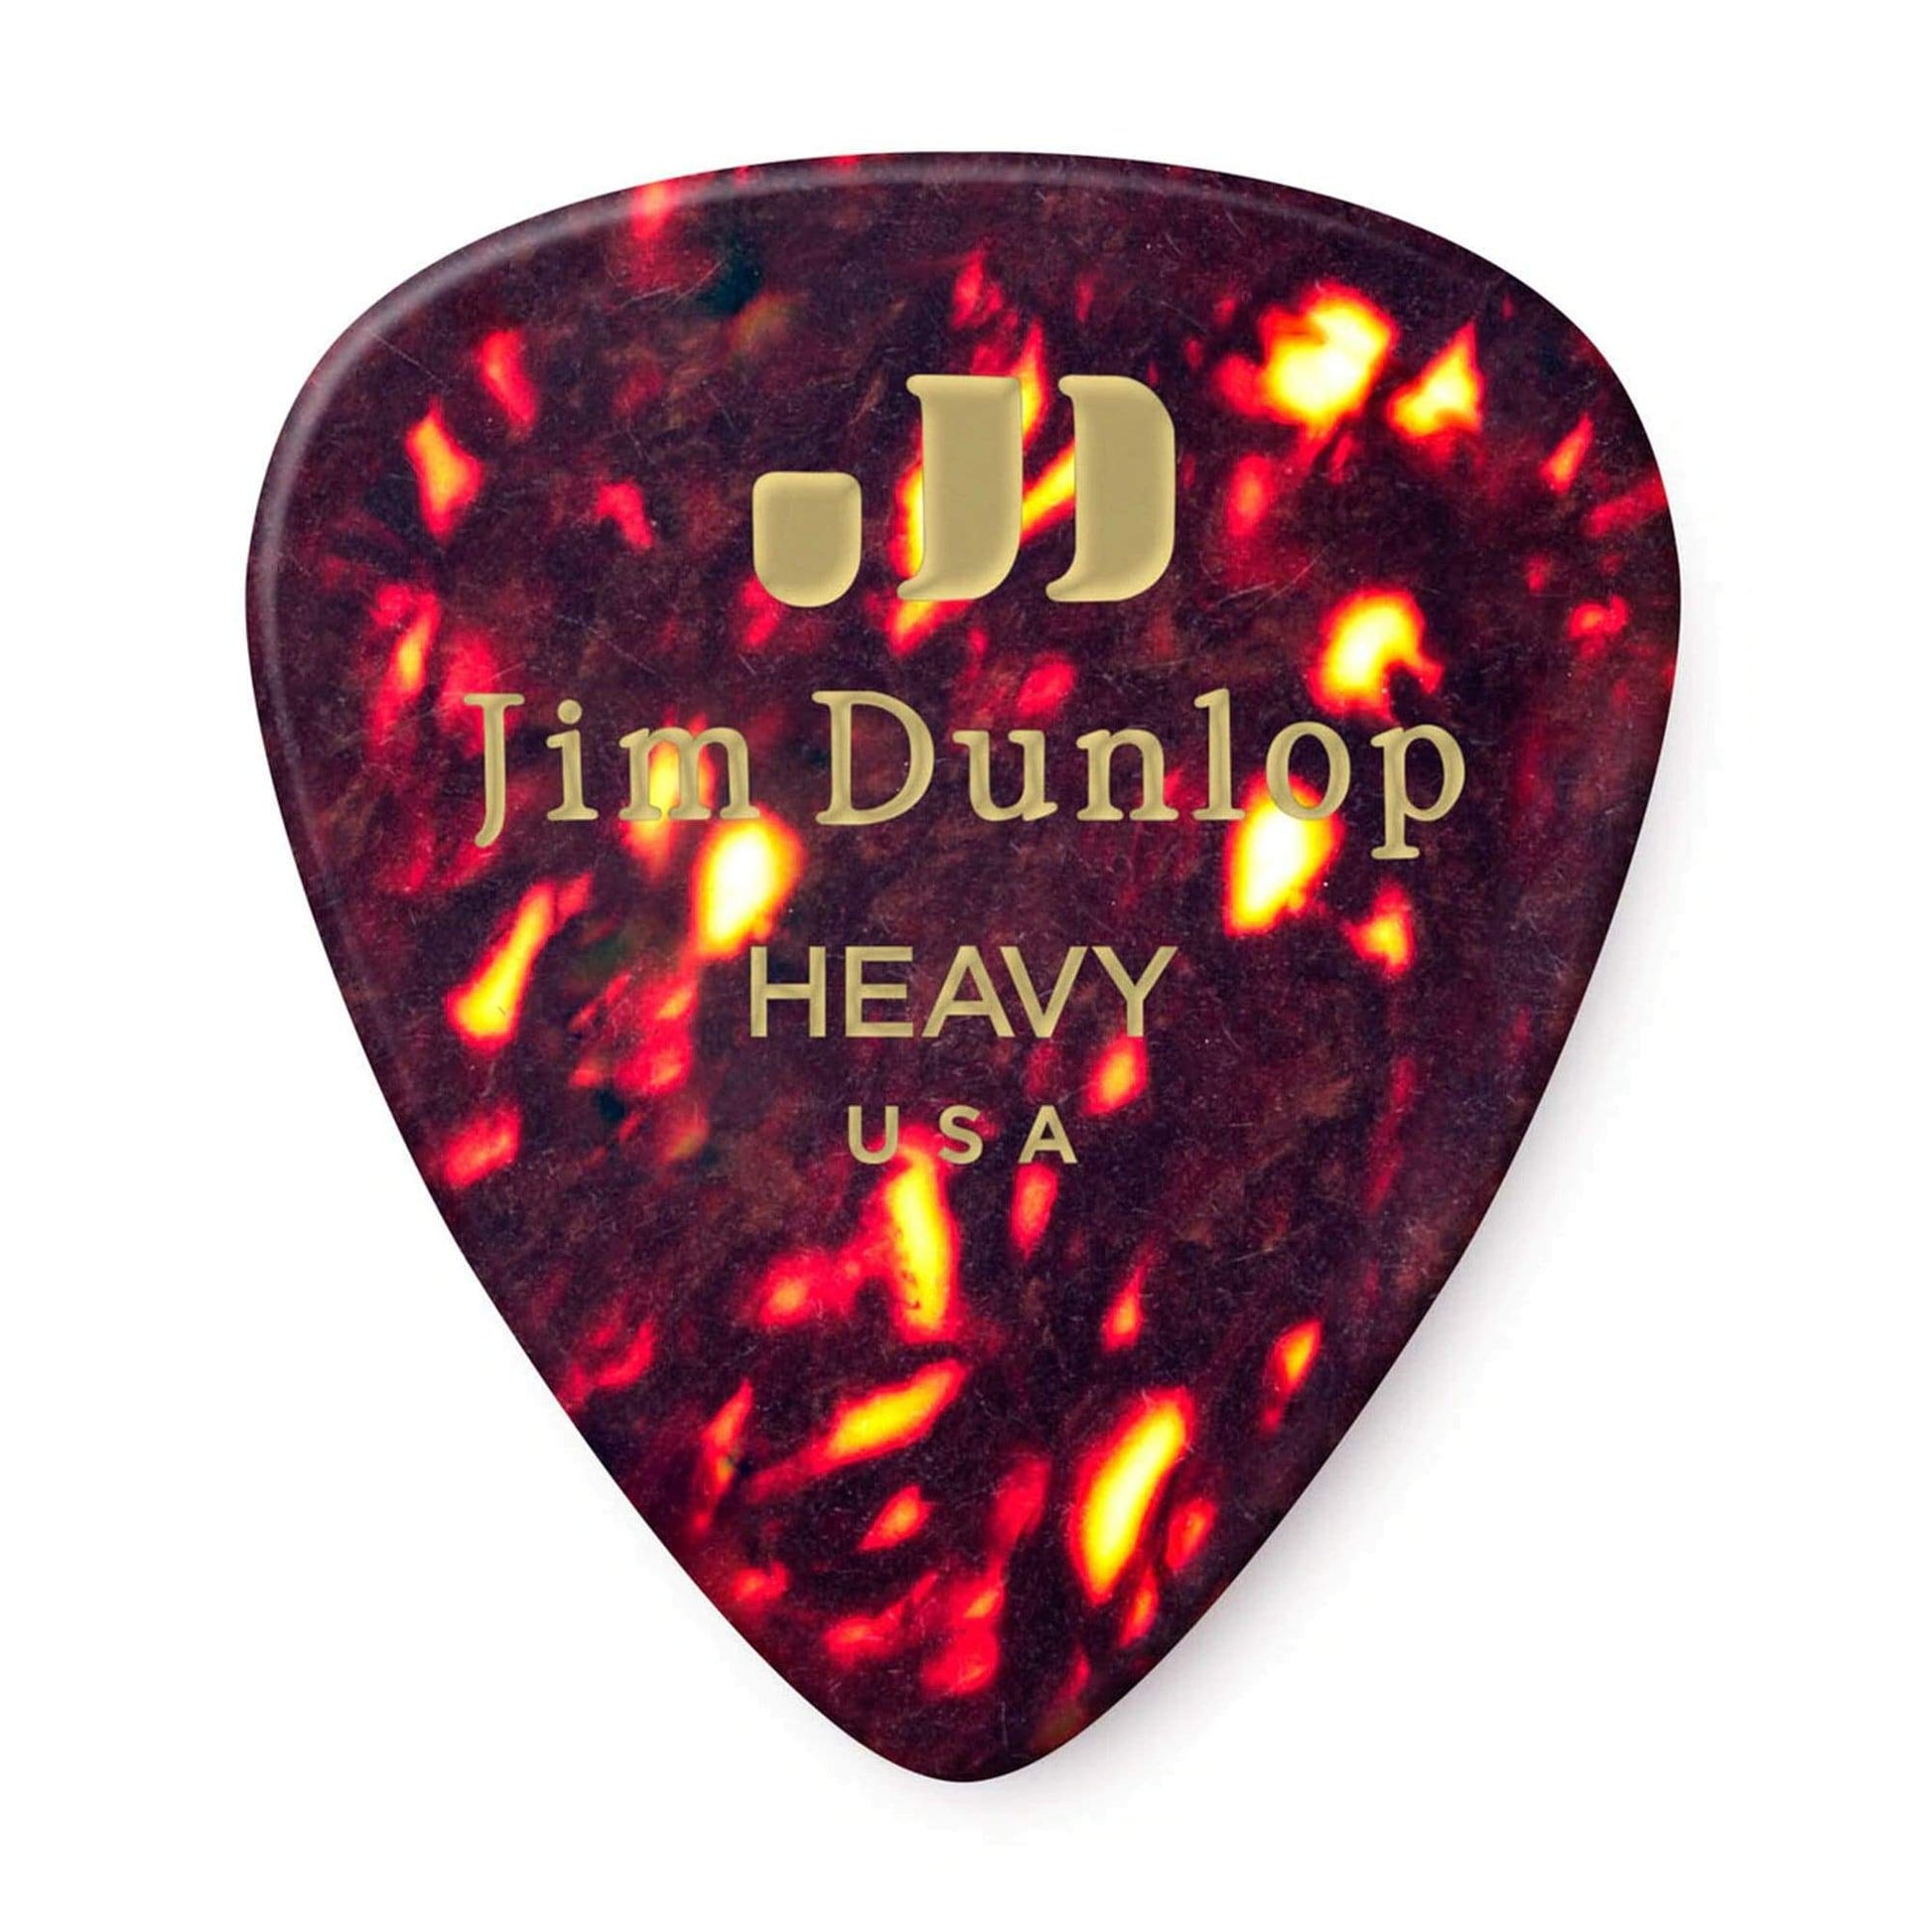 Dunlop Celluloid Guitar Picks Shell Heavy Player Pack 2 Pack (24) Bundle Accessories / Picks